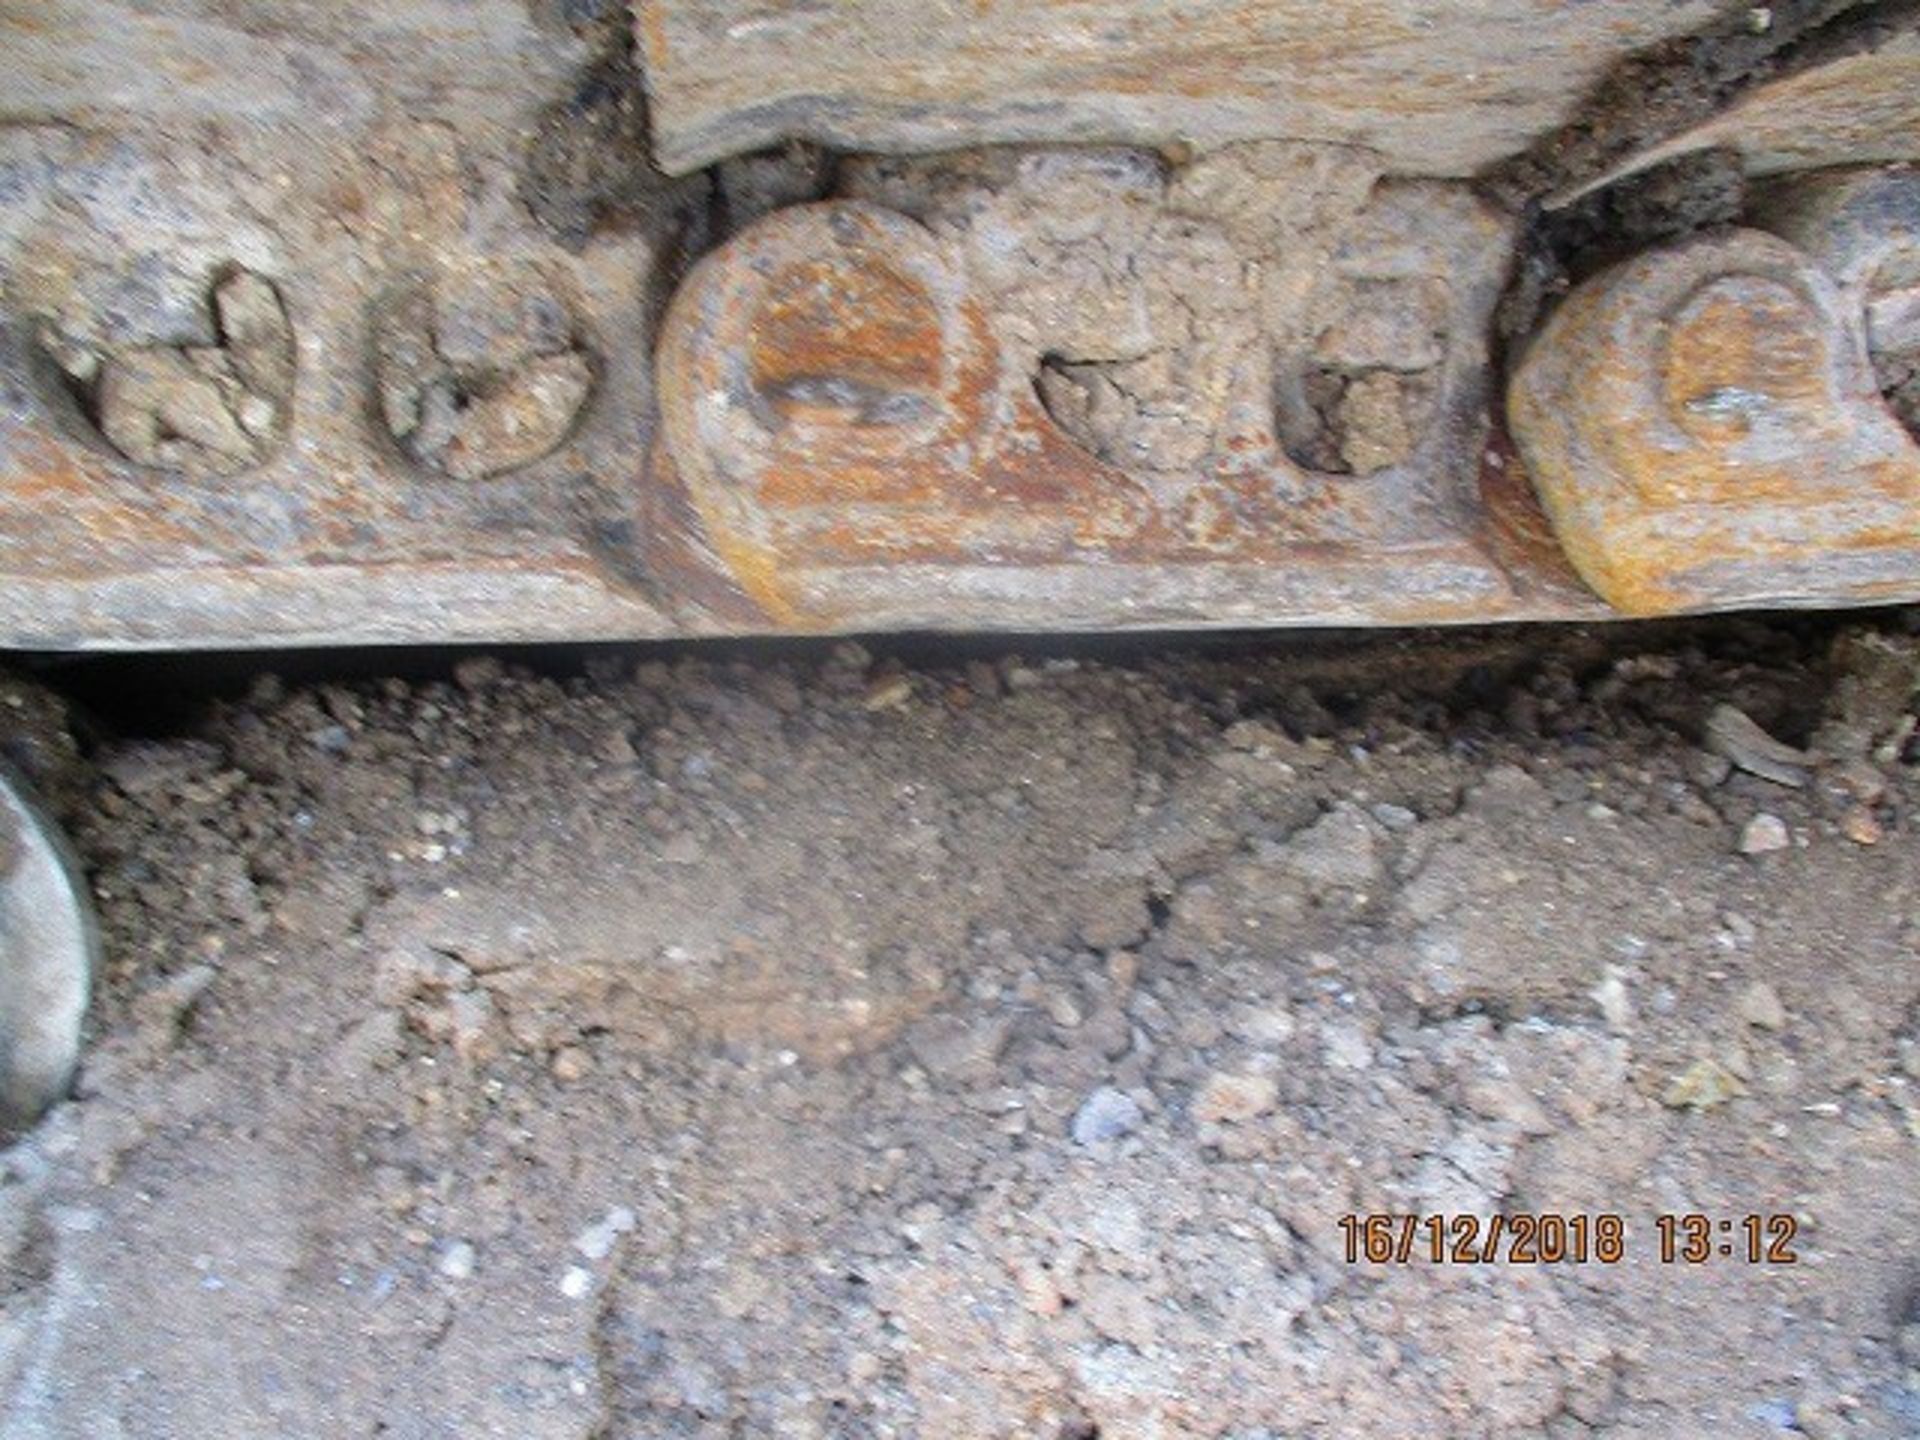 Komatsu PC300-8 Tracked Excavator - Image 28 of 31